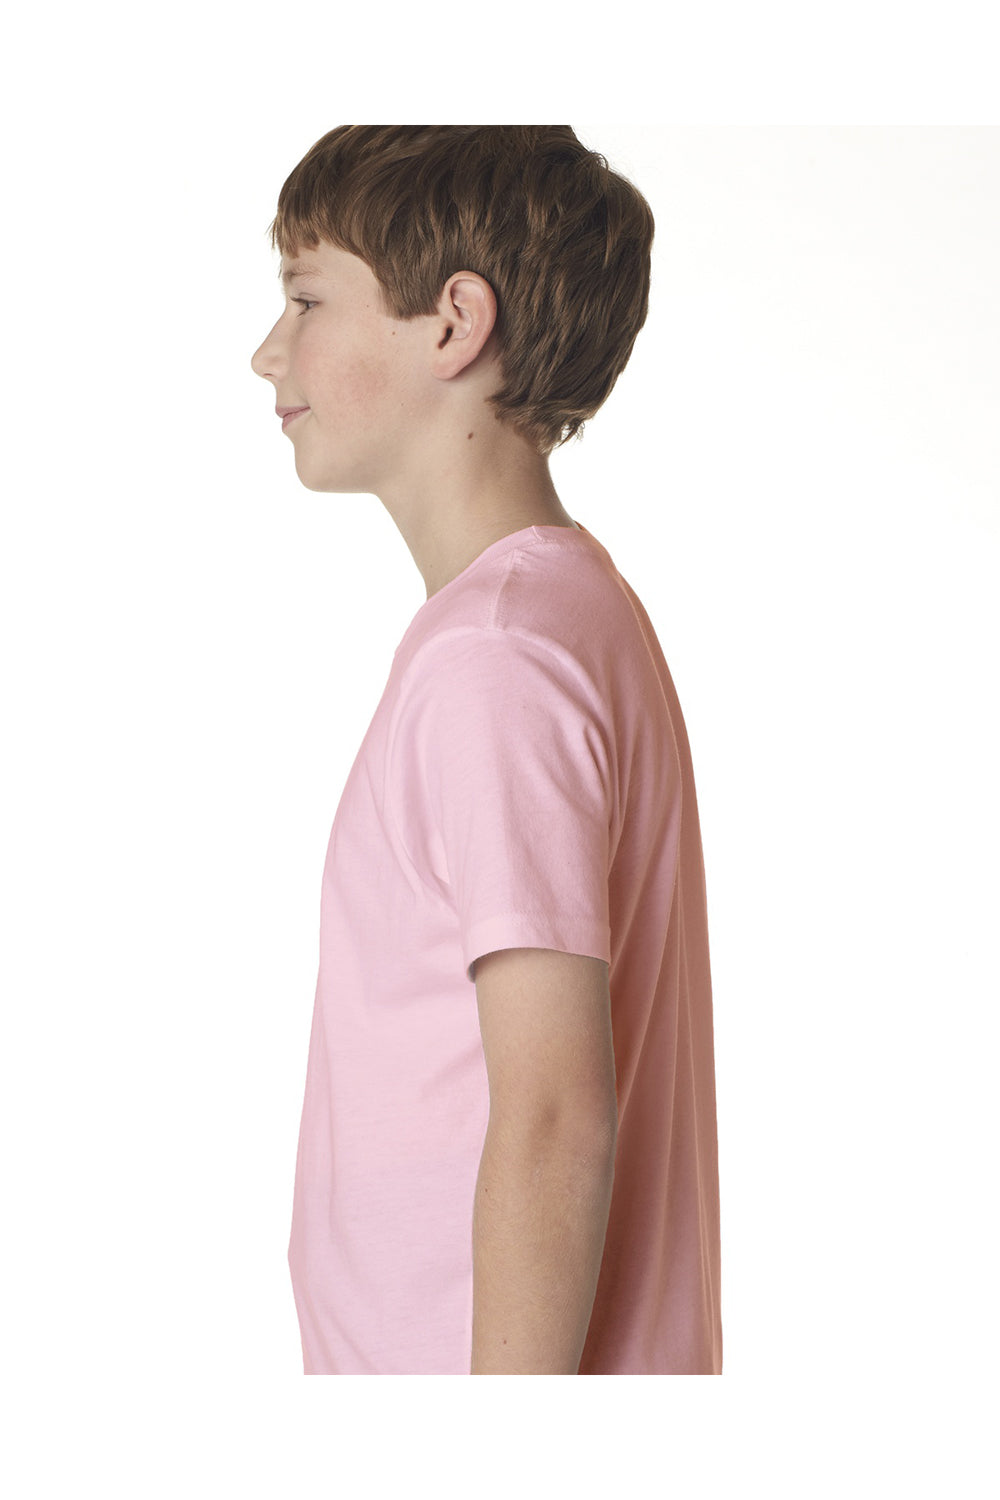 Next Level 3310 Youth Fine Jersey Short Sleeve Crewneck T-Shirt Light Pink Side